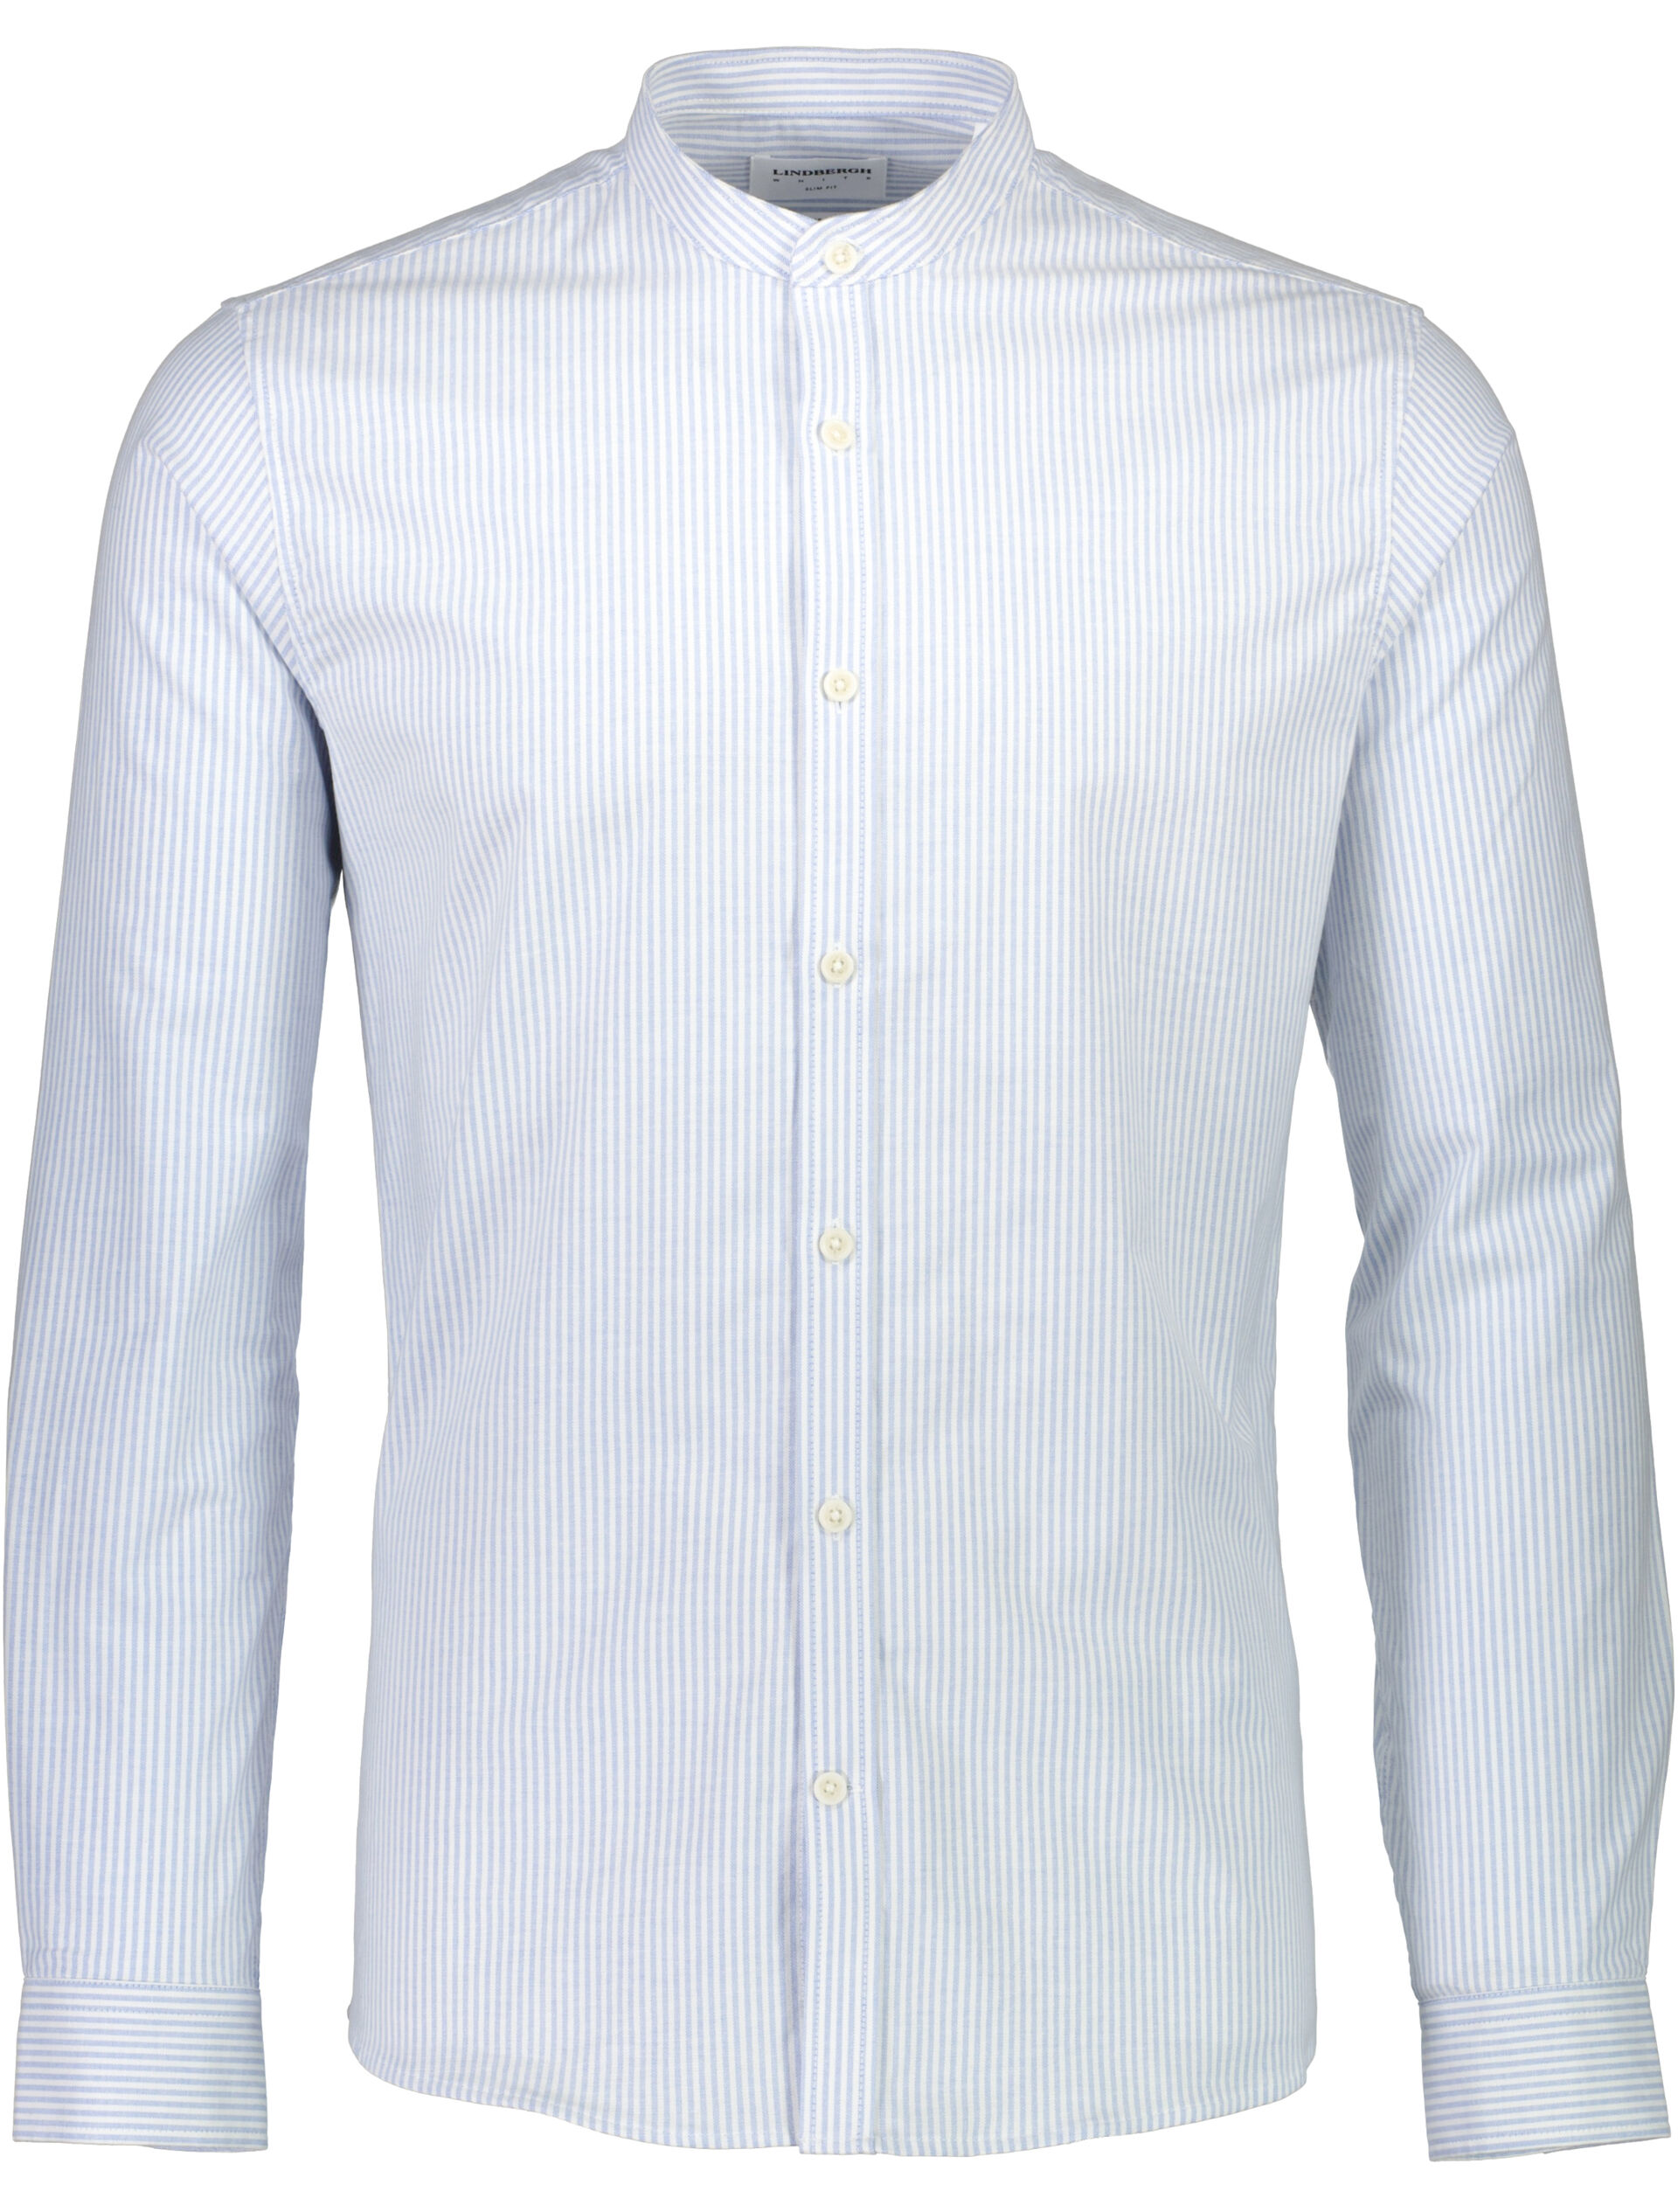 Oxford shirt 30-203296A